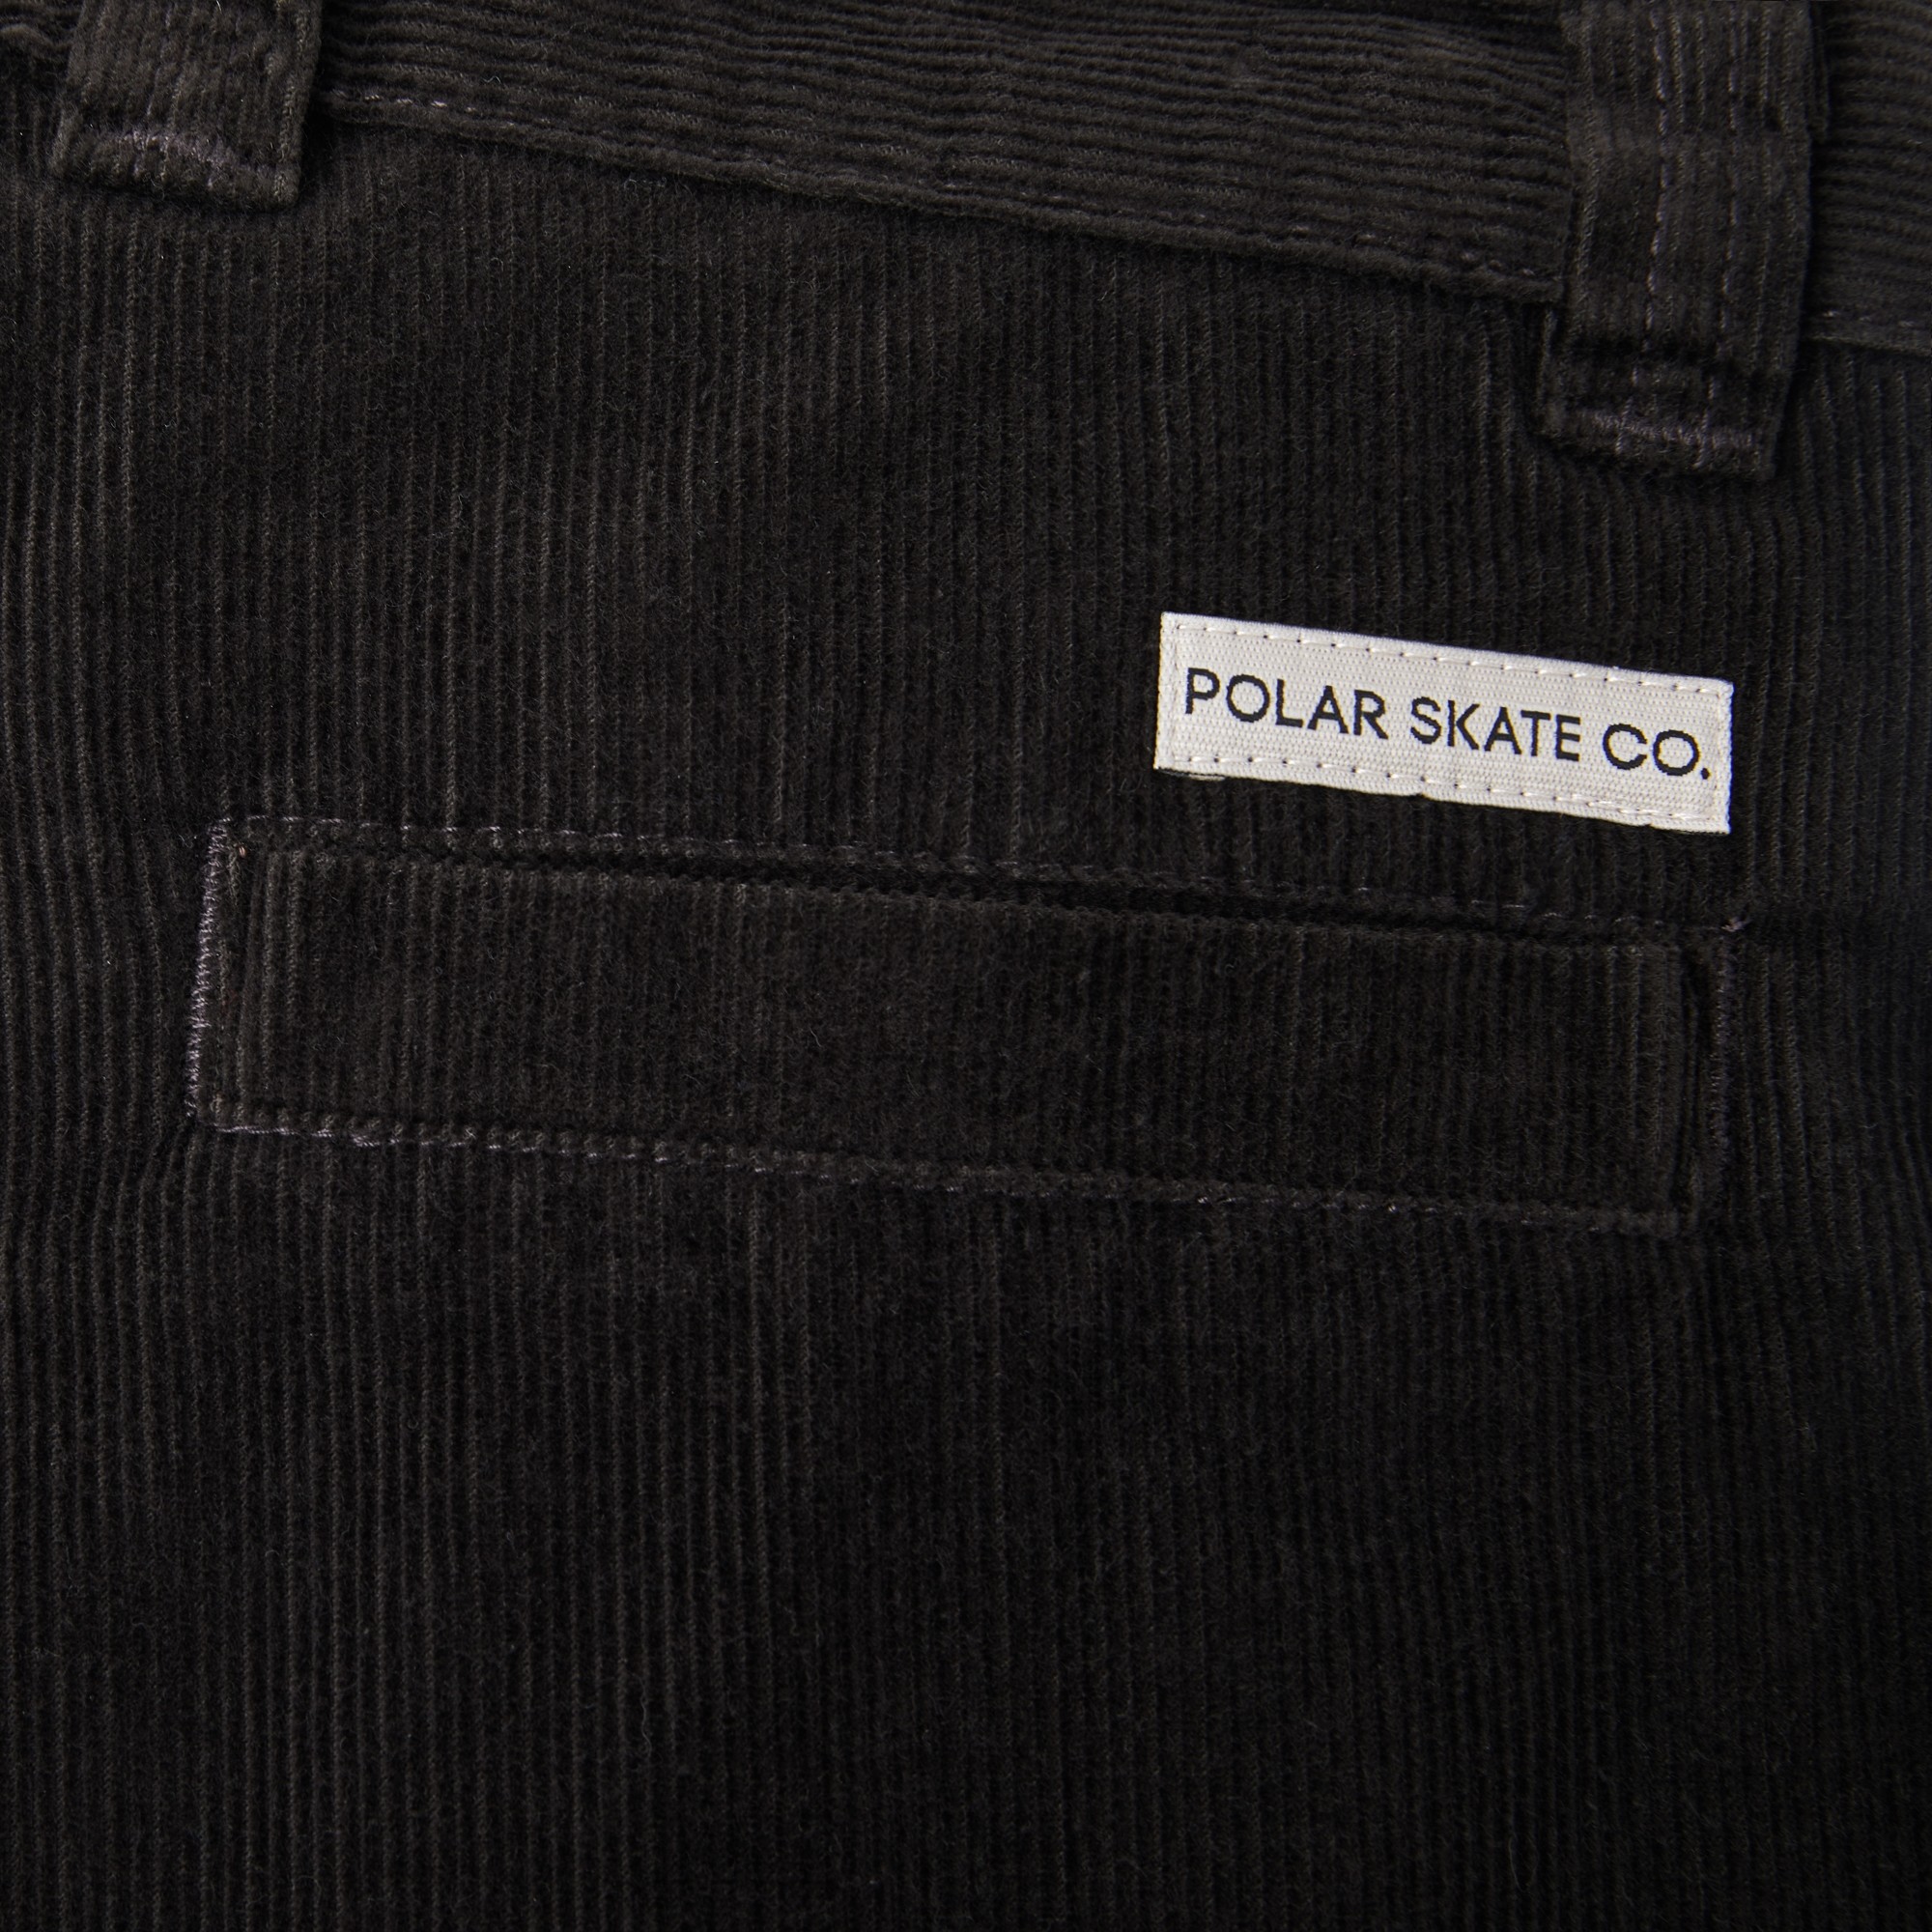 Polar Skate Co. Grund Chino (Brown) - POL-SP21-GRUNDCHINO-BRN - Consortium